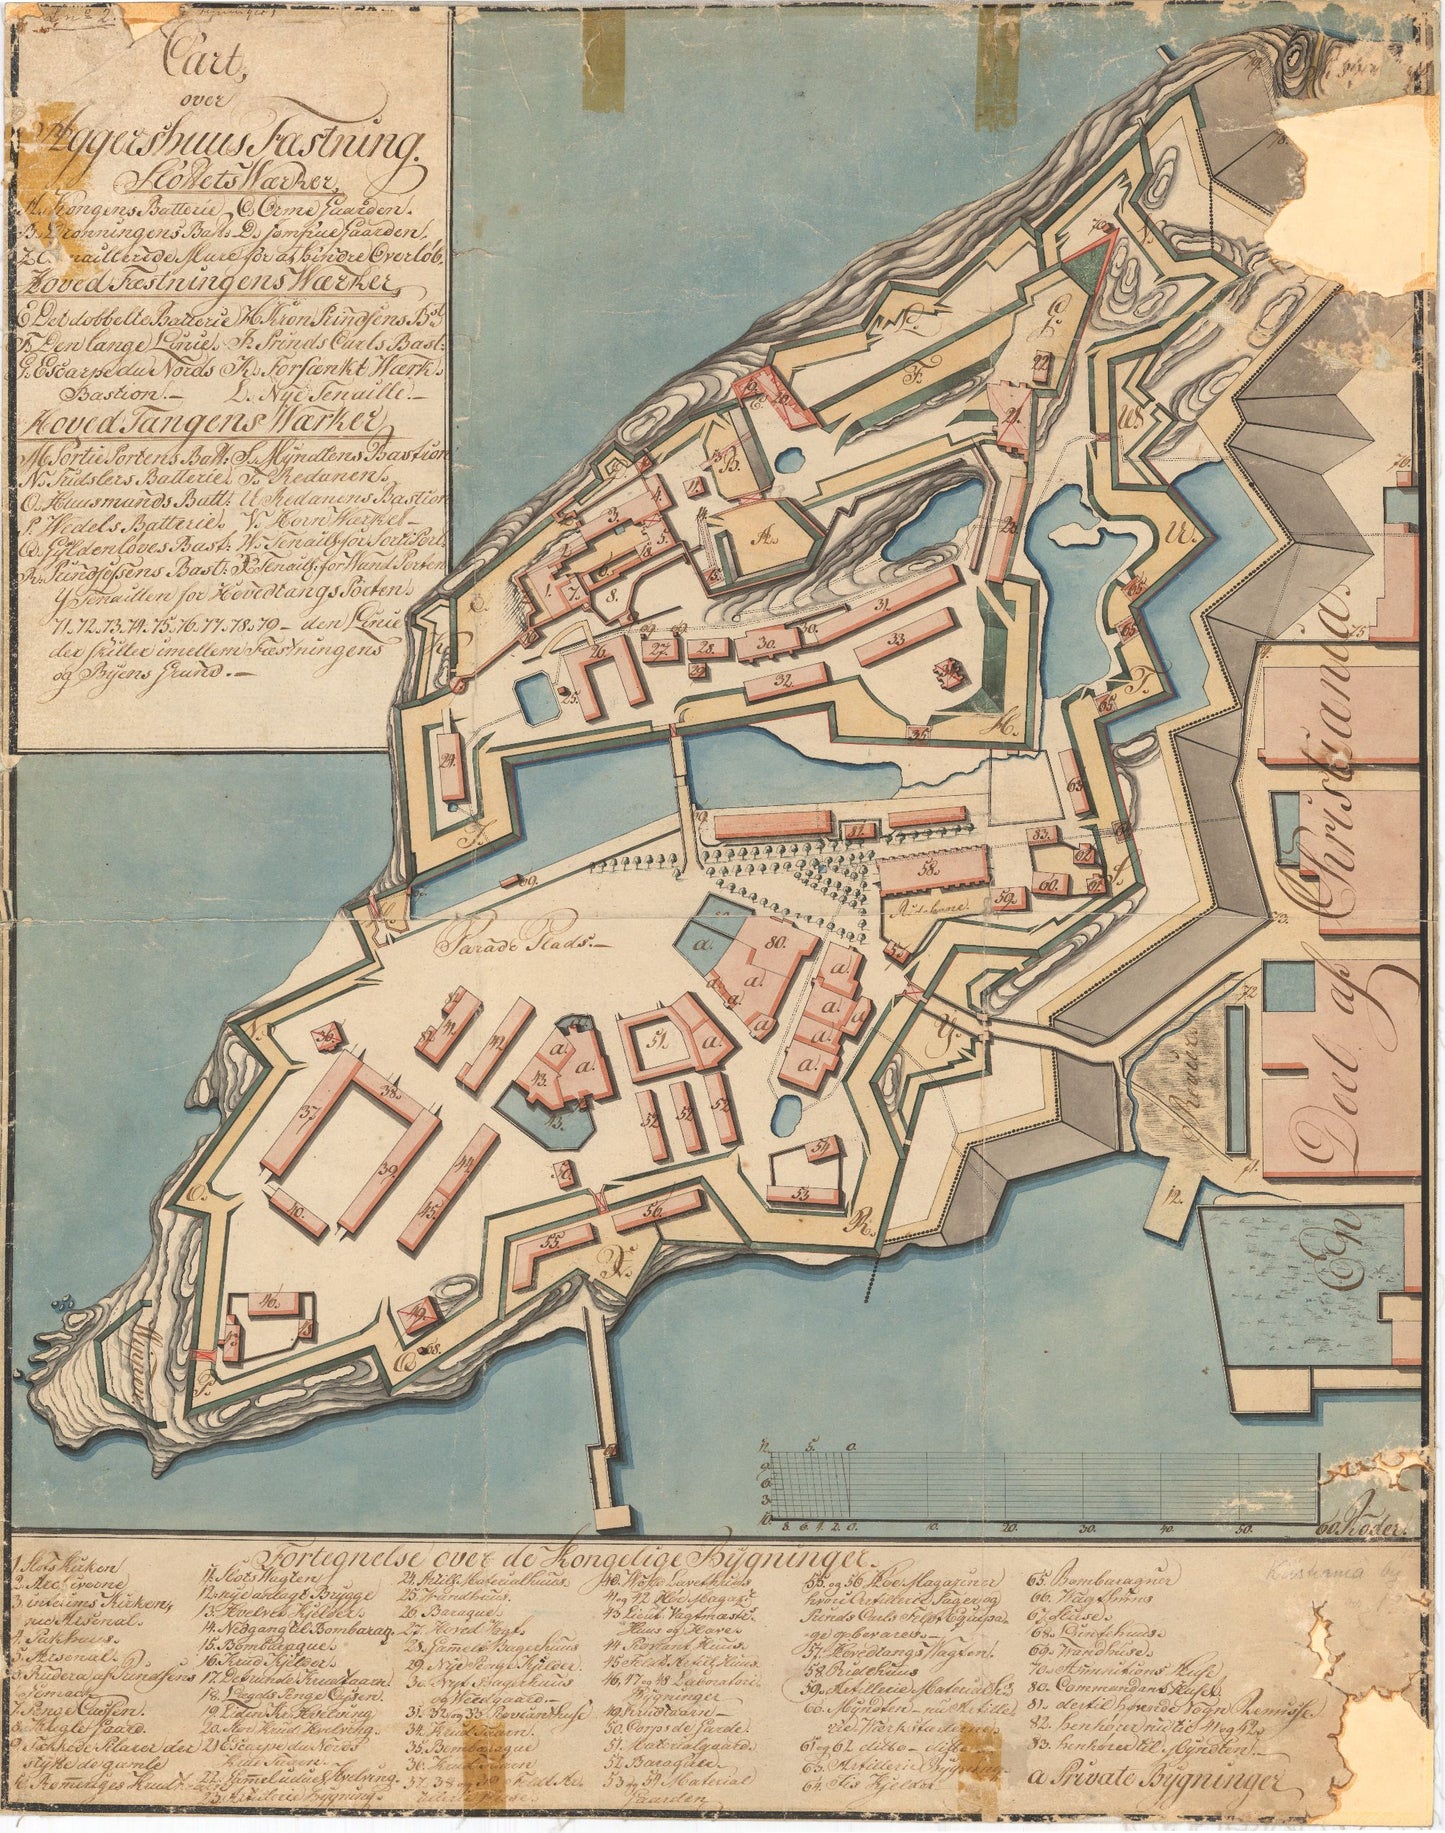 Kristiania amt nr 17: Cart over Aggershuus Fæstning: Oslo